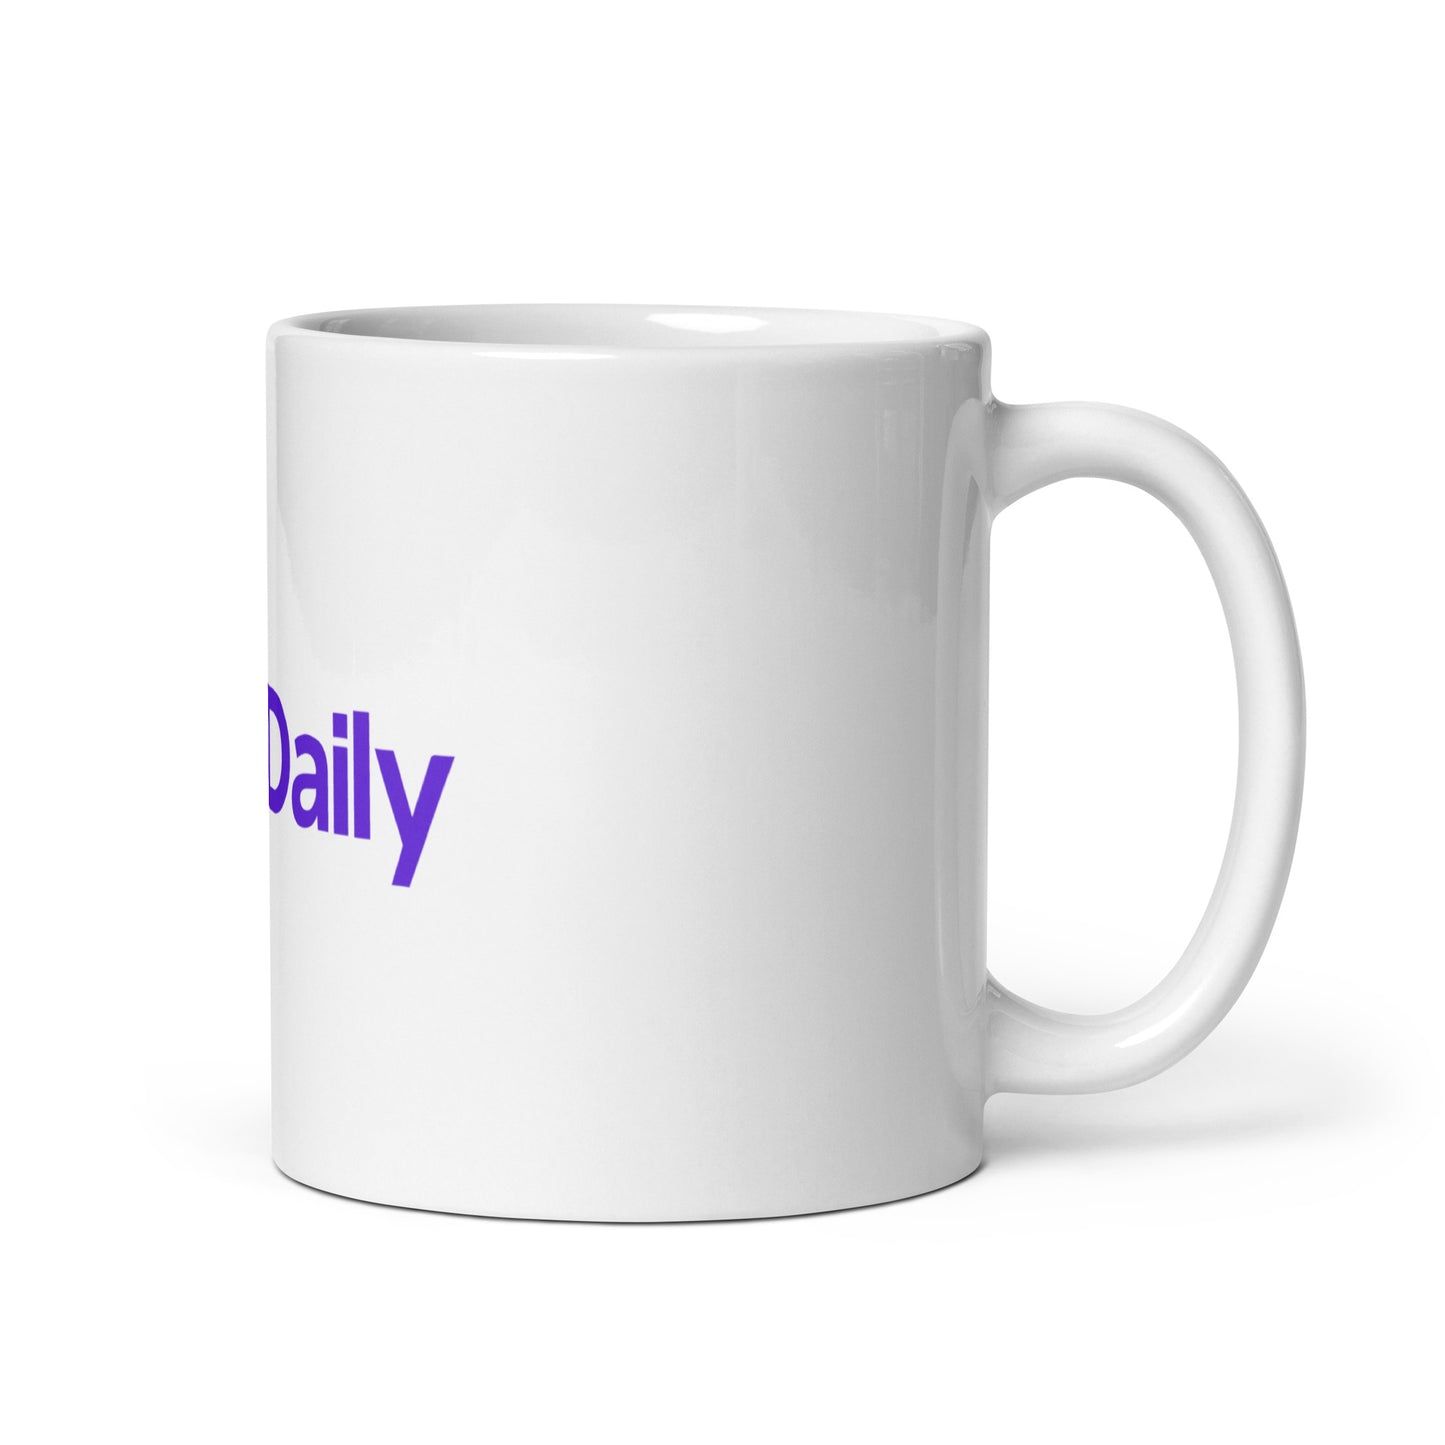 CRE Daily Coffee Mug